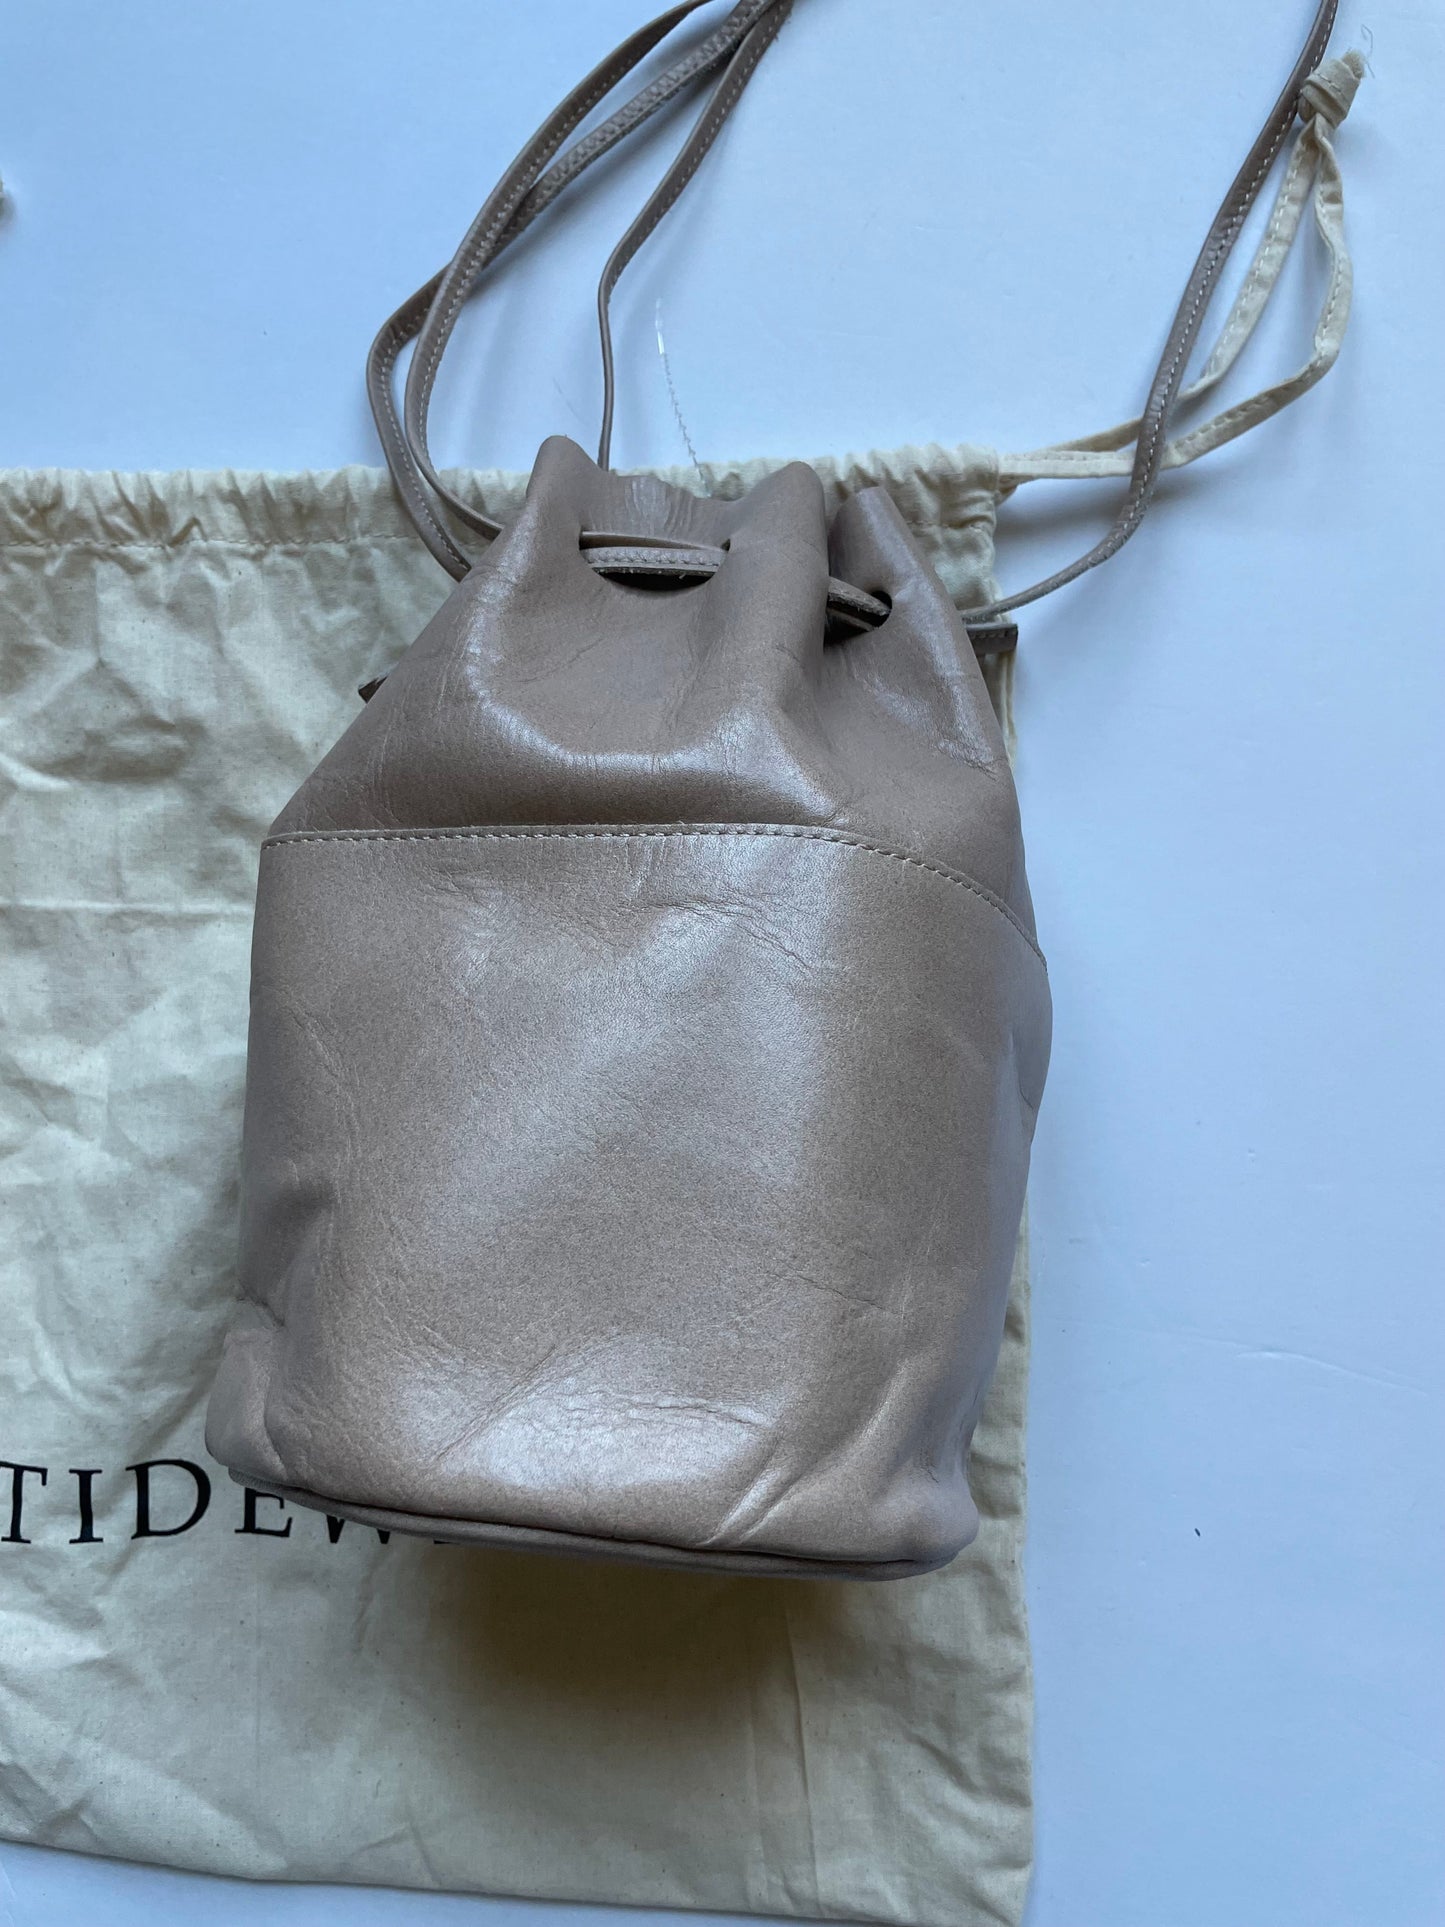 Handbag Designer By Tideway Size: Medium